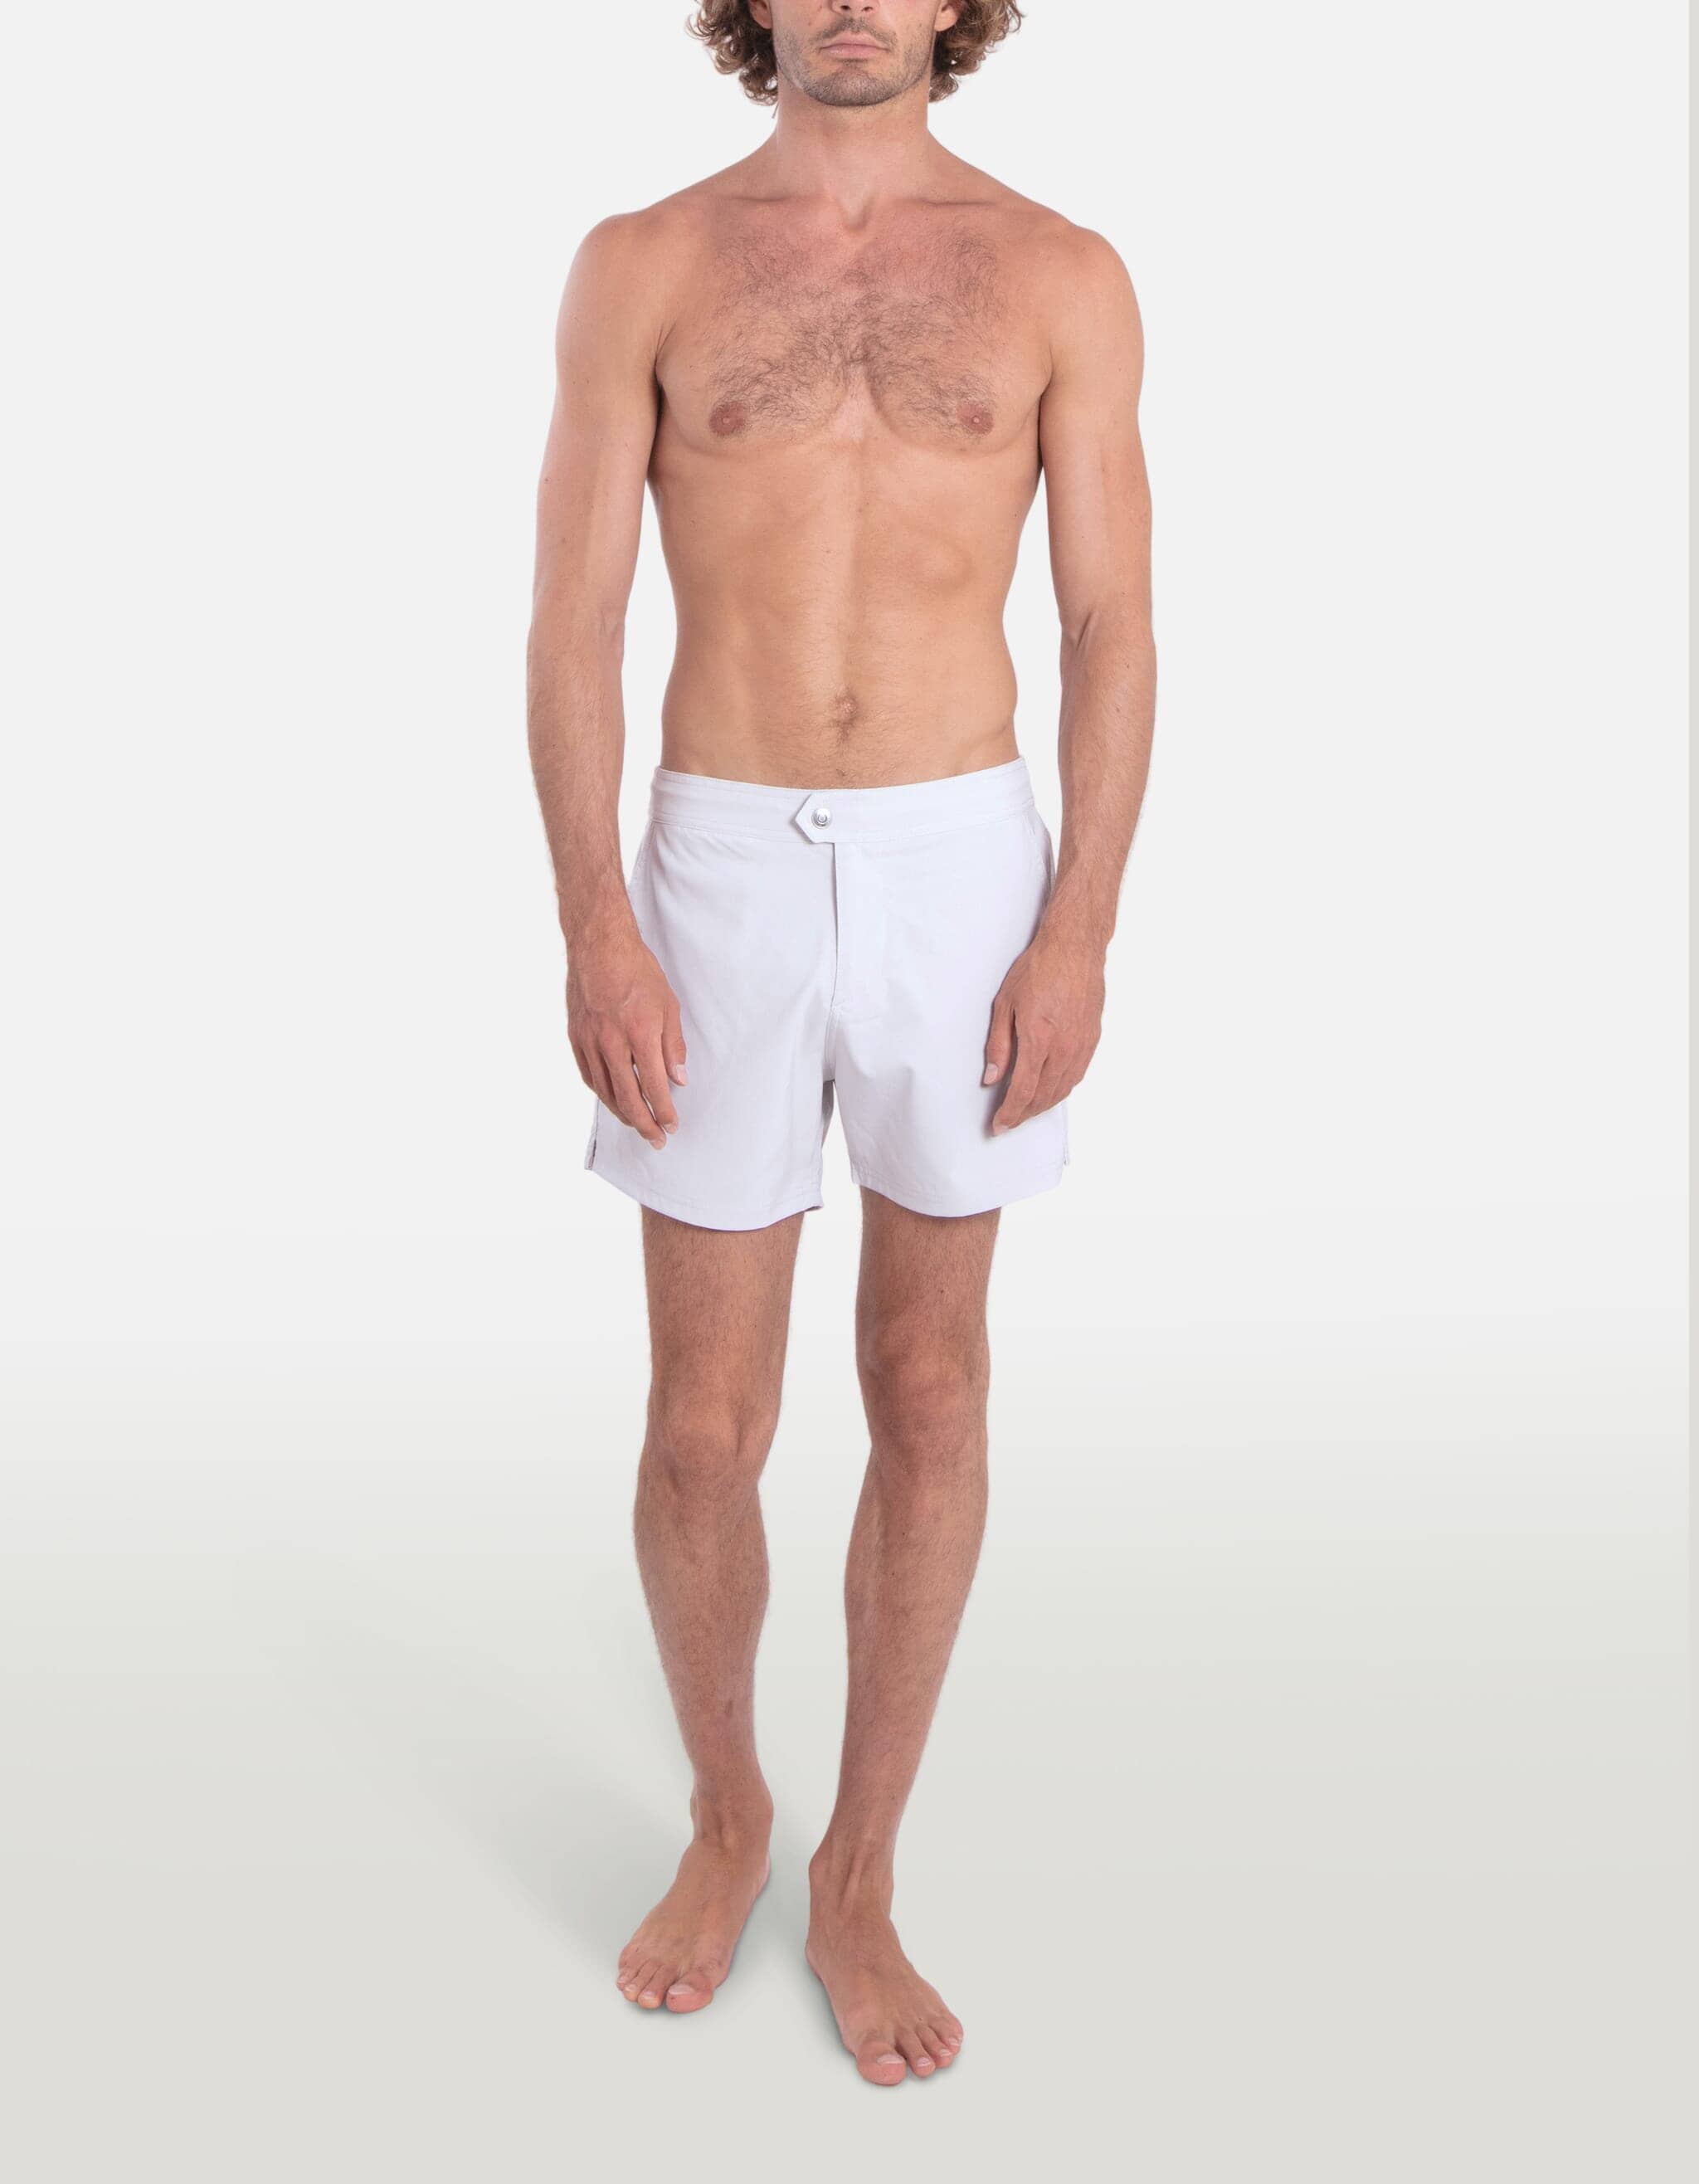 Ben - 00. Light Grey Swim Shorts - Ben MACKEENE 